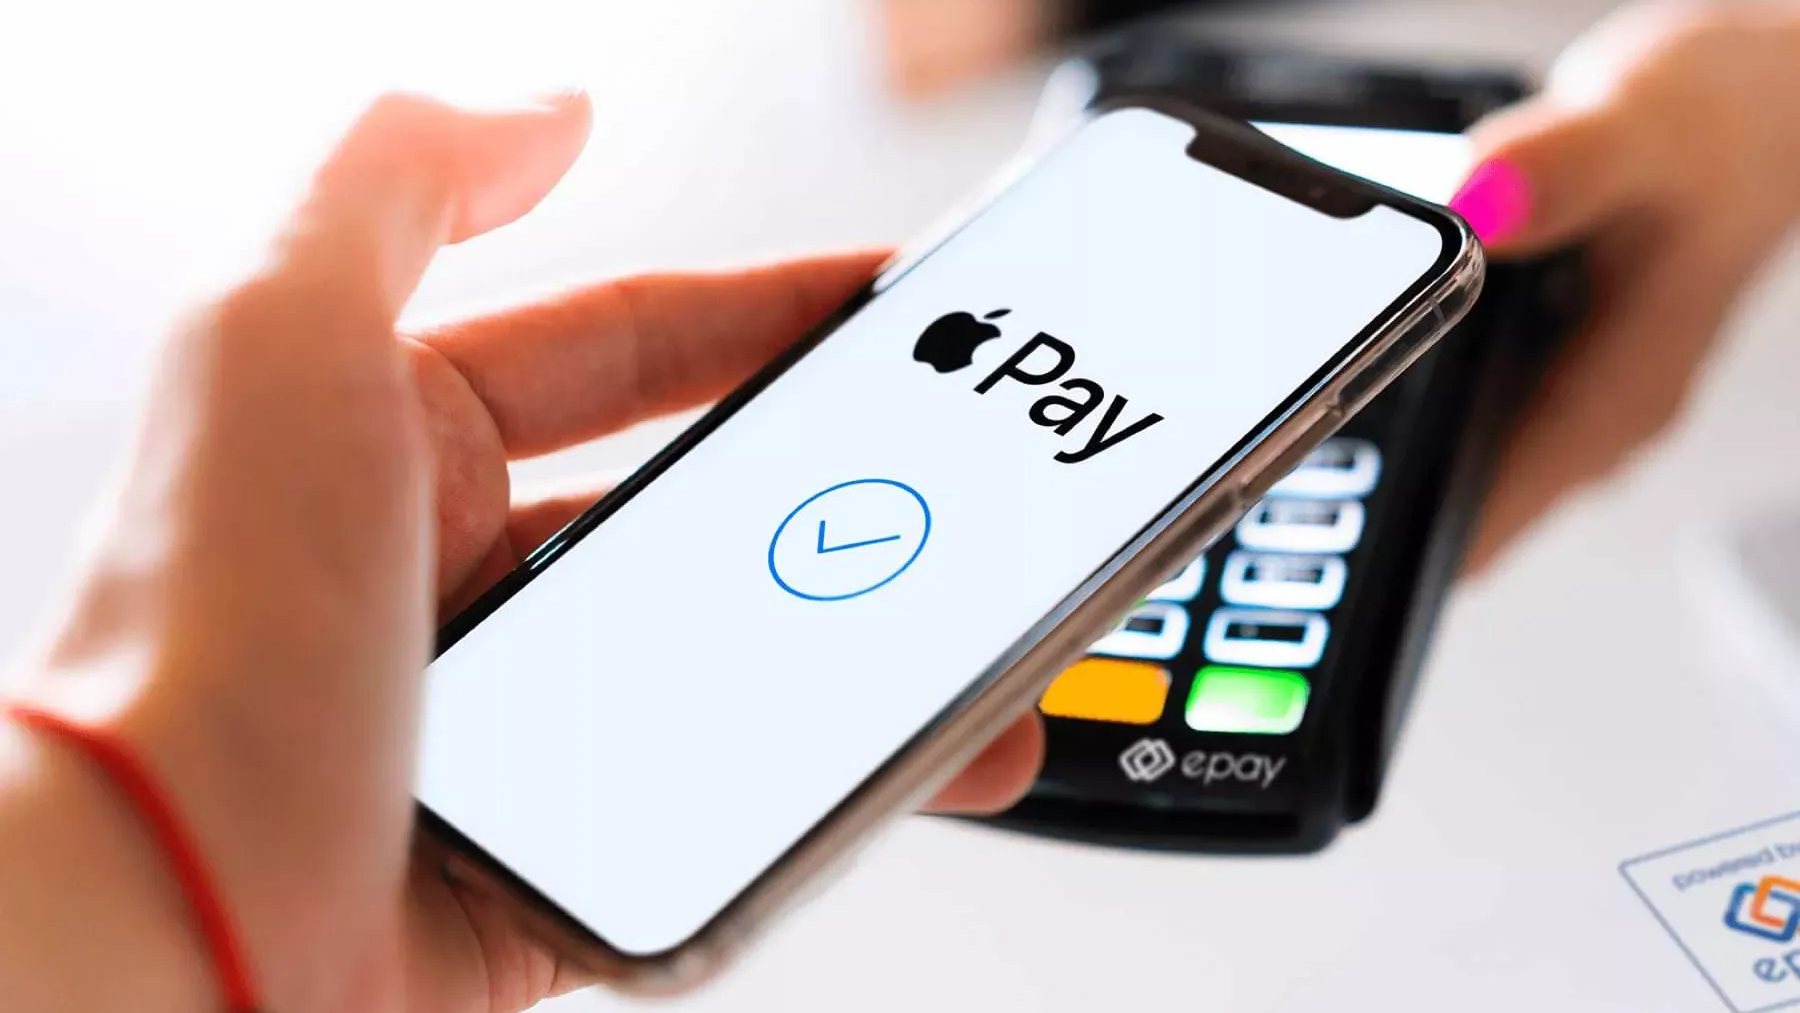 Когда кыргызстанцам ждать Apple Pay на рынке оплаты? Ответ Нацбанка